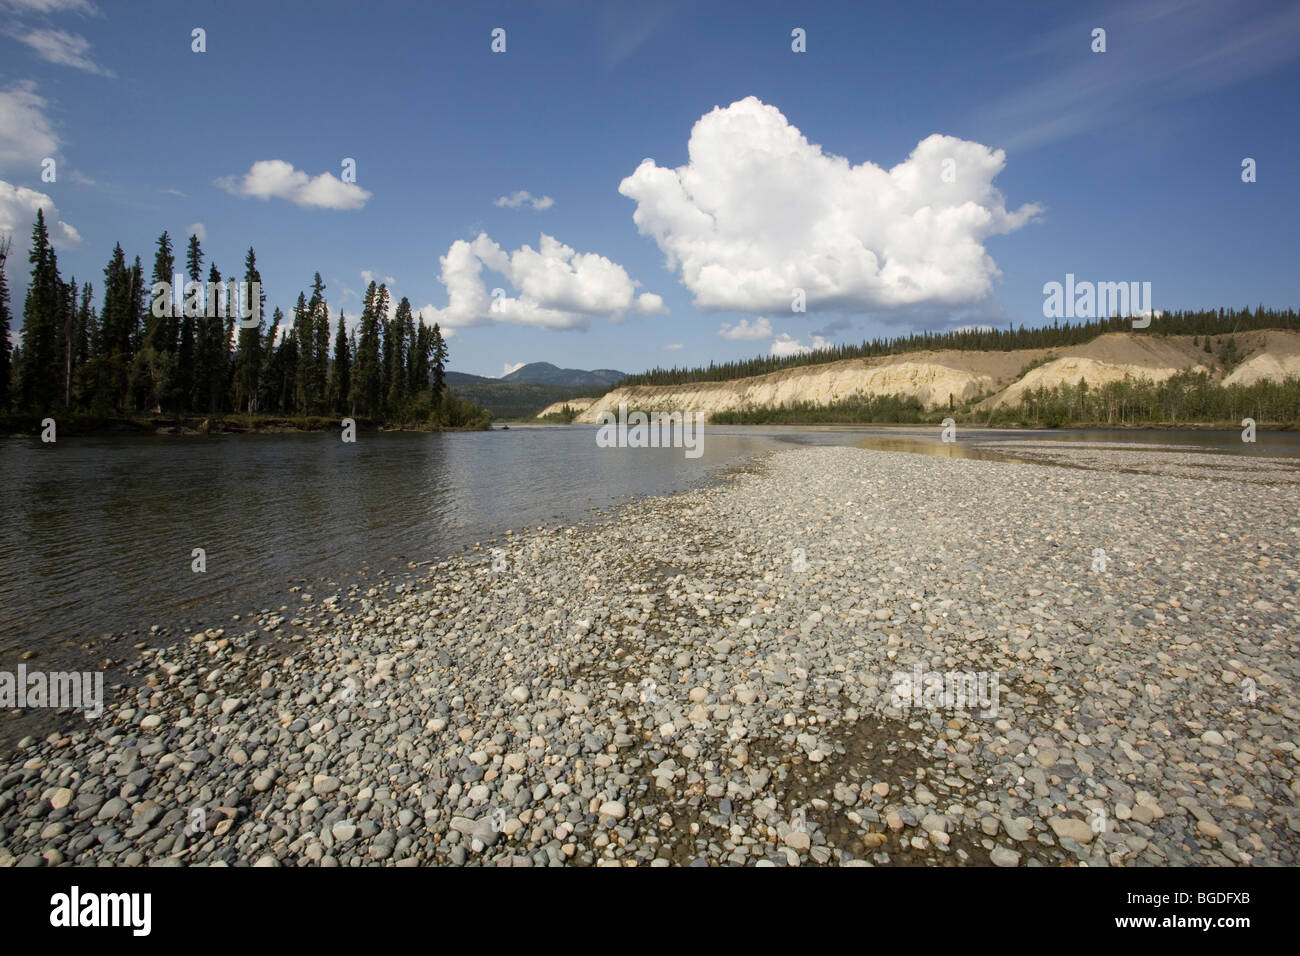 Gravel bar on Teslin River, water formed landscape, high cut bank, erosion behind, Yukon Territory, Canada Stock Photo